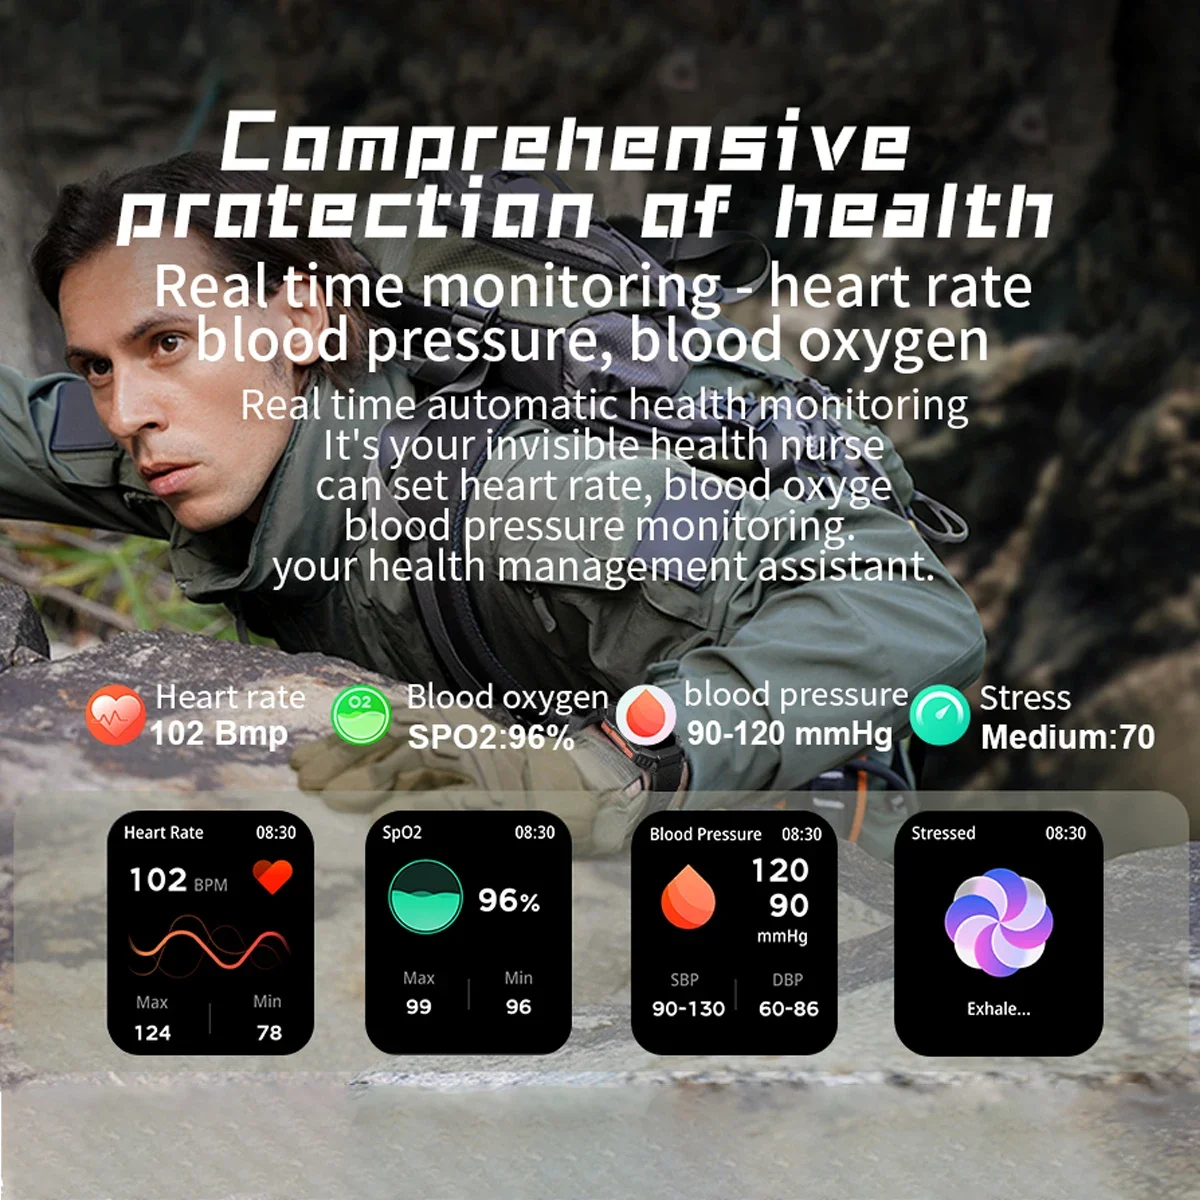 Canmixs GPS Smart Watch Men 620mAh Compass 100+Sport módok Ftiness órák Ip68 vízálló AI Voice Bluetooth Call okosóra